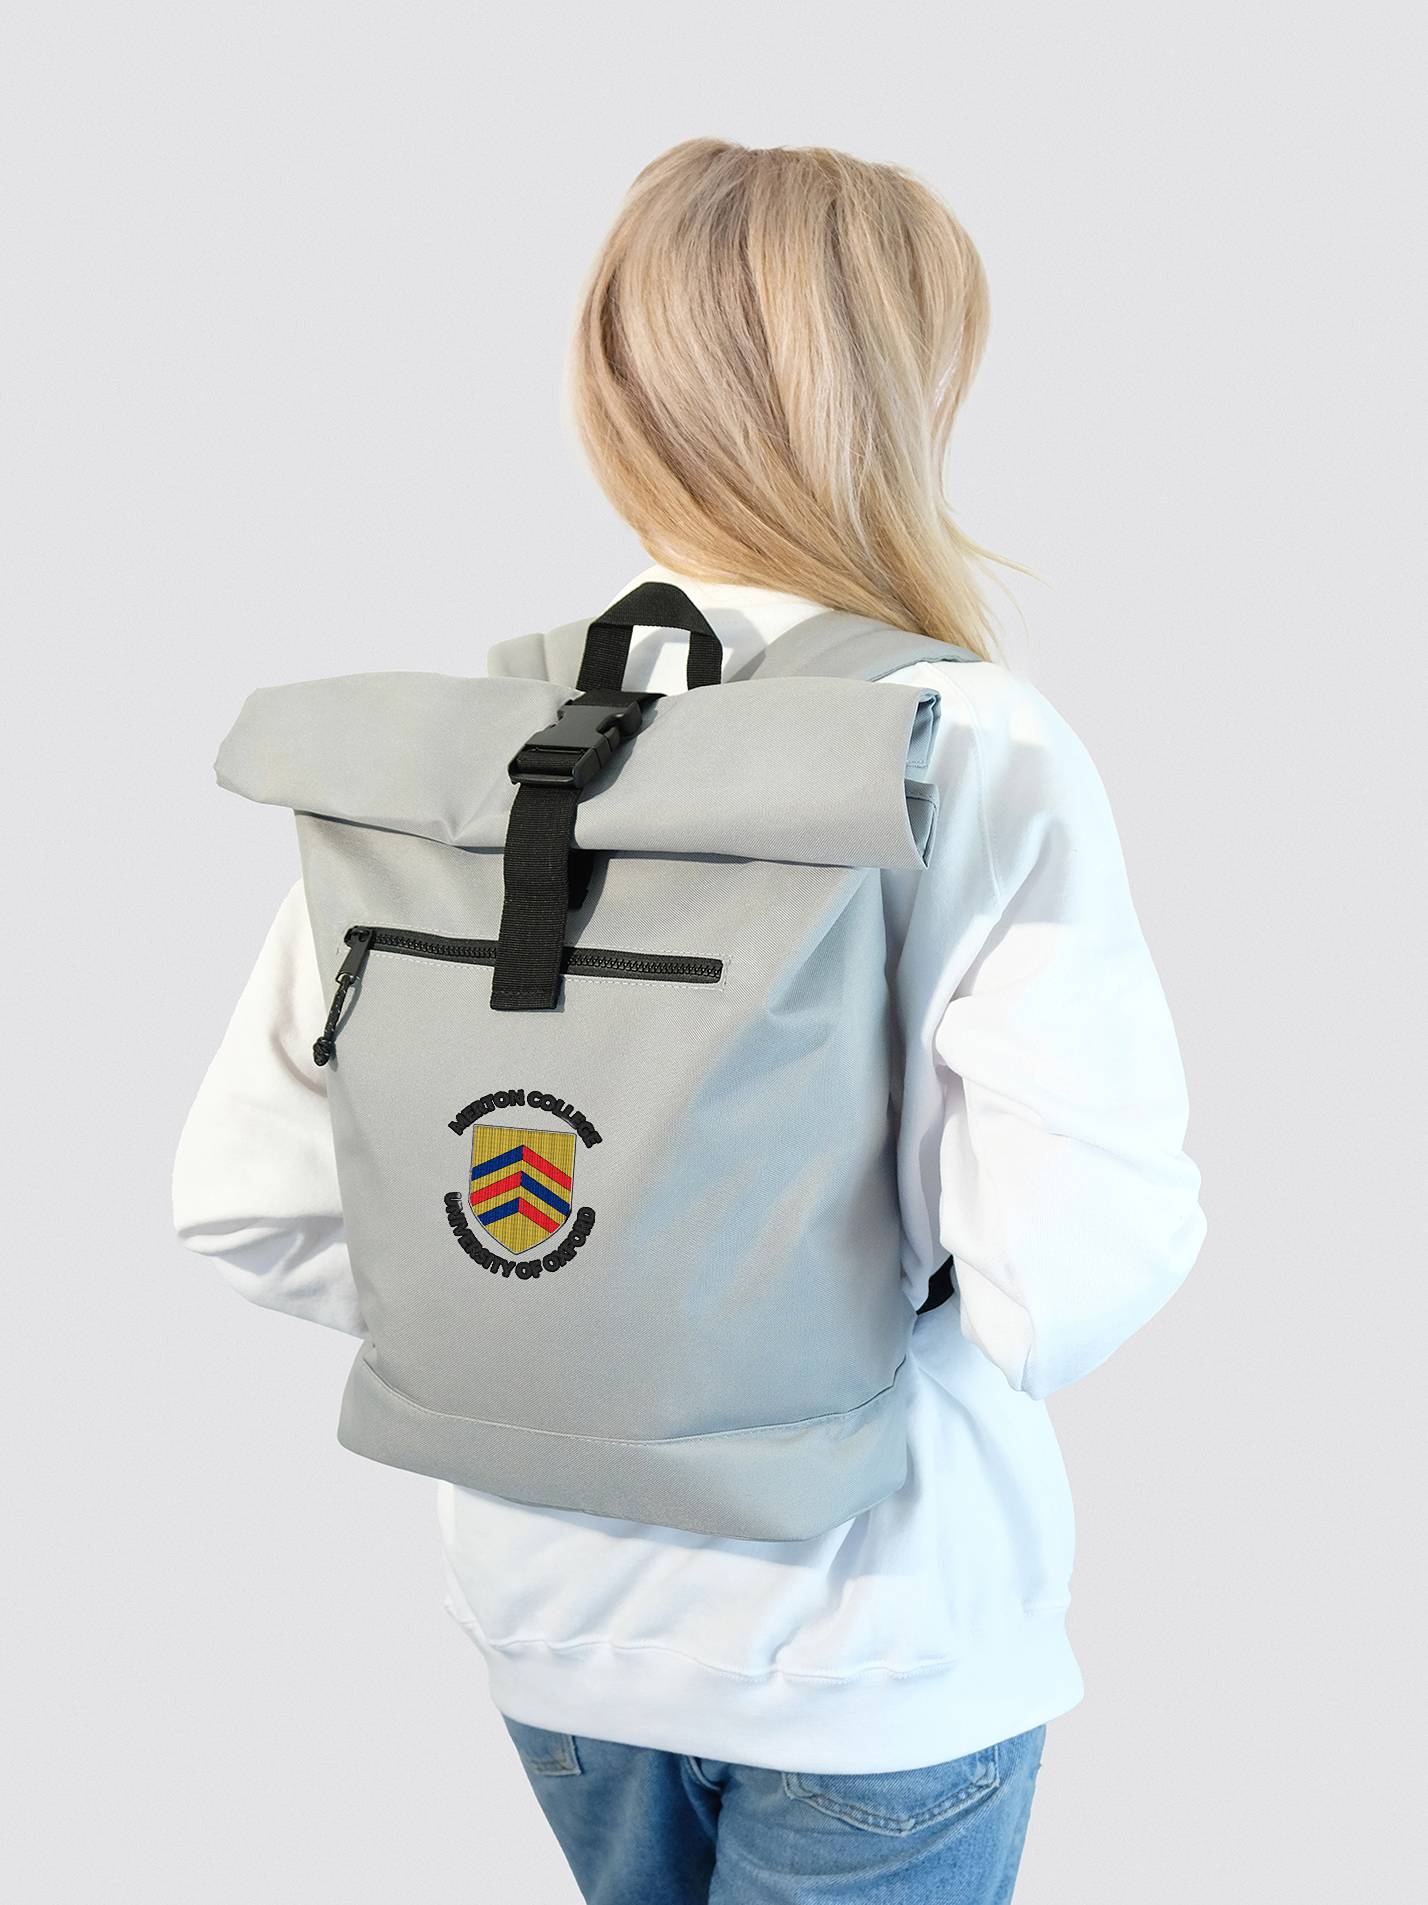 Merton College Oxford JCR Roll Top Backpack